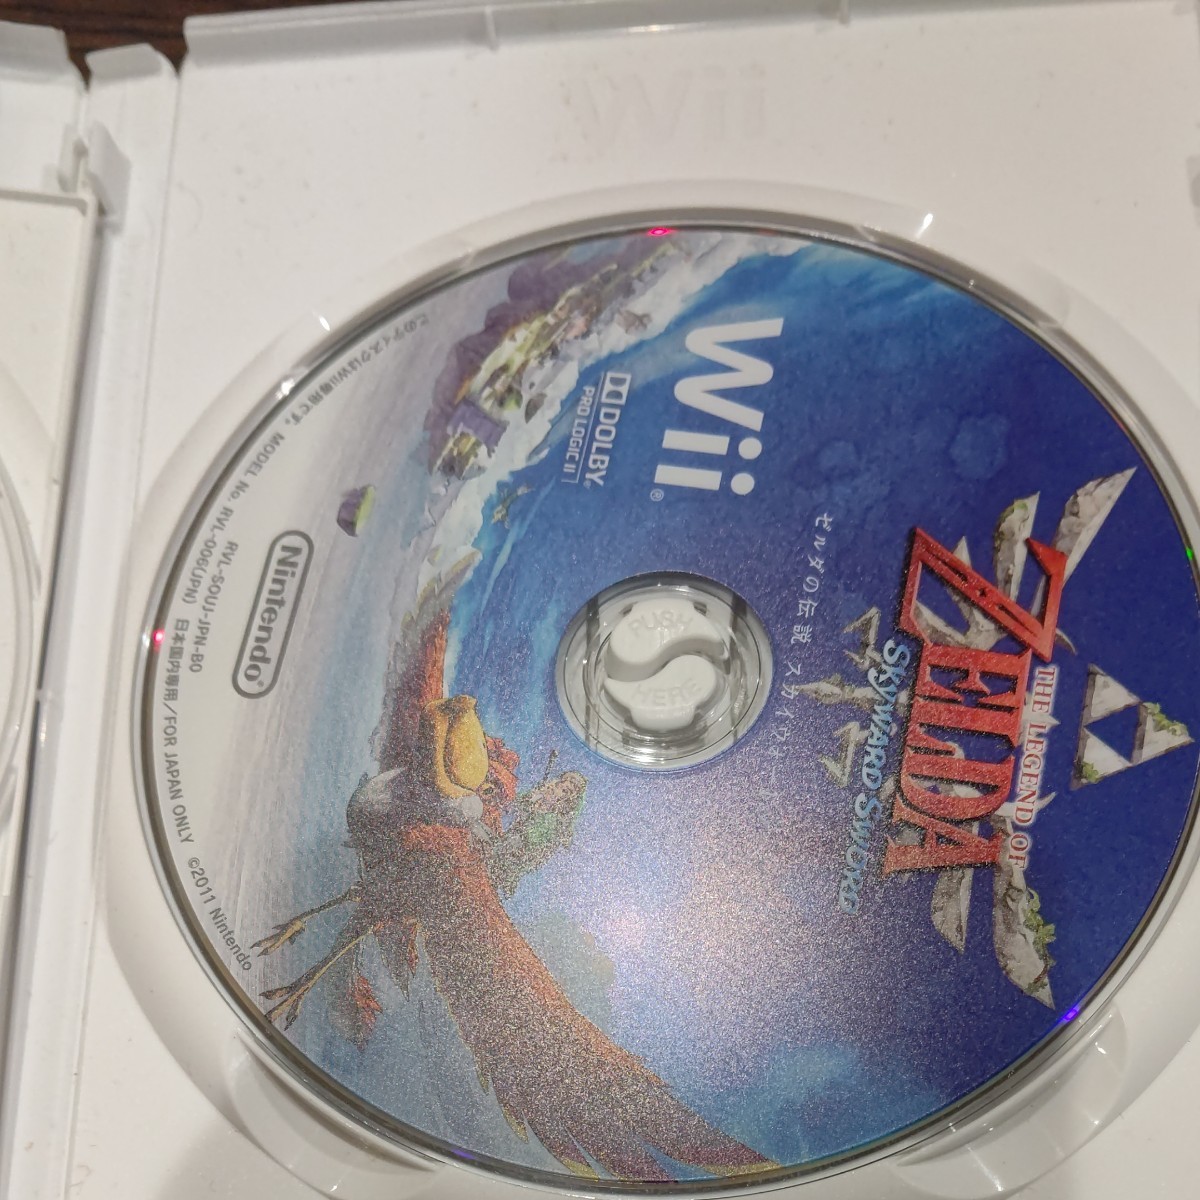 Wii ゼルダの伝説 スカイウォードソード スペシャルCD付き